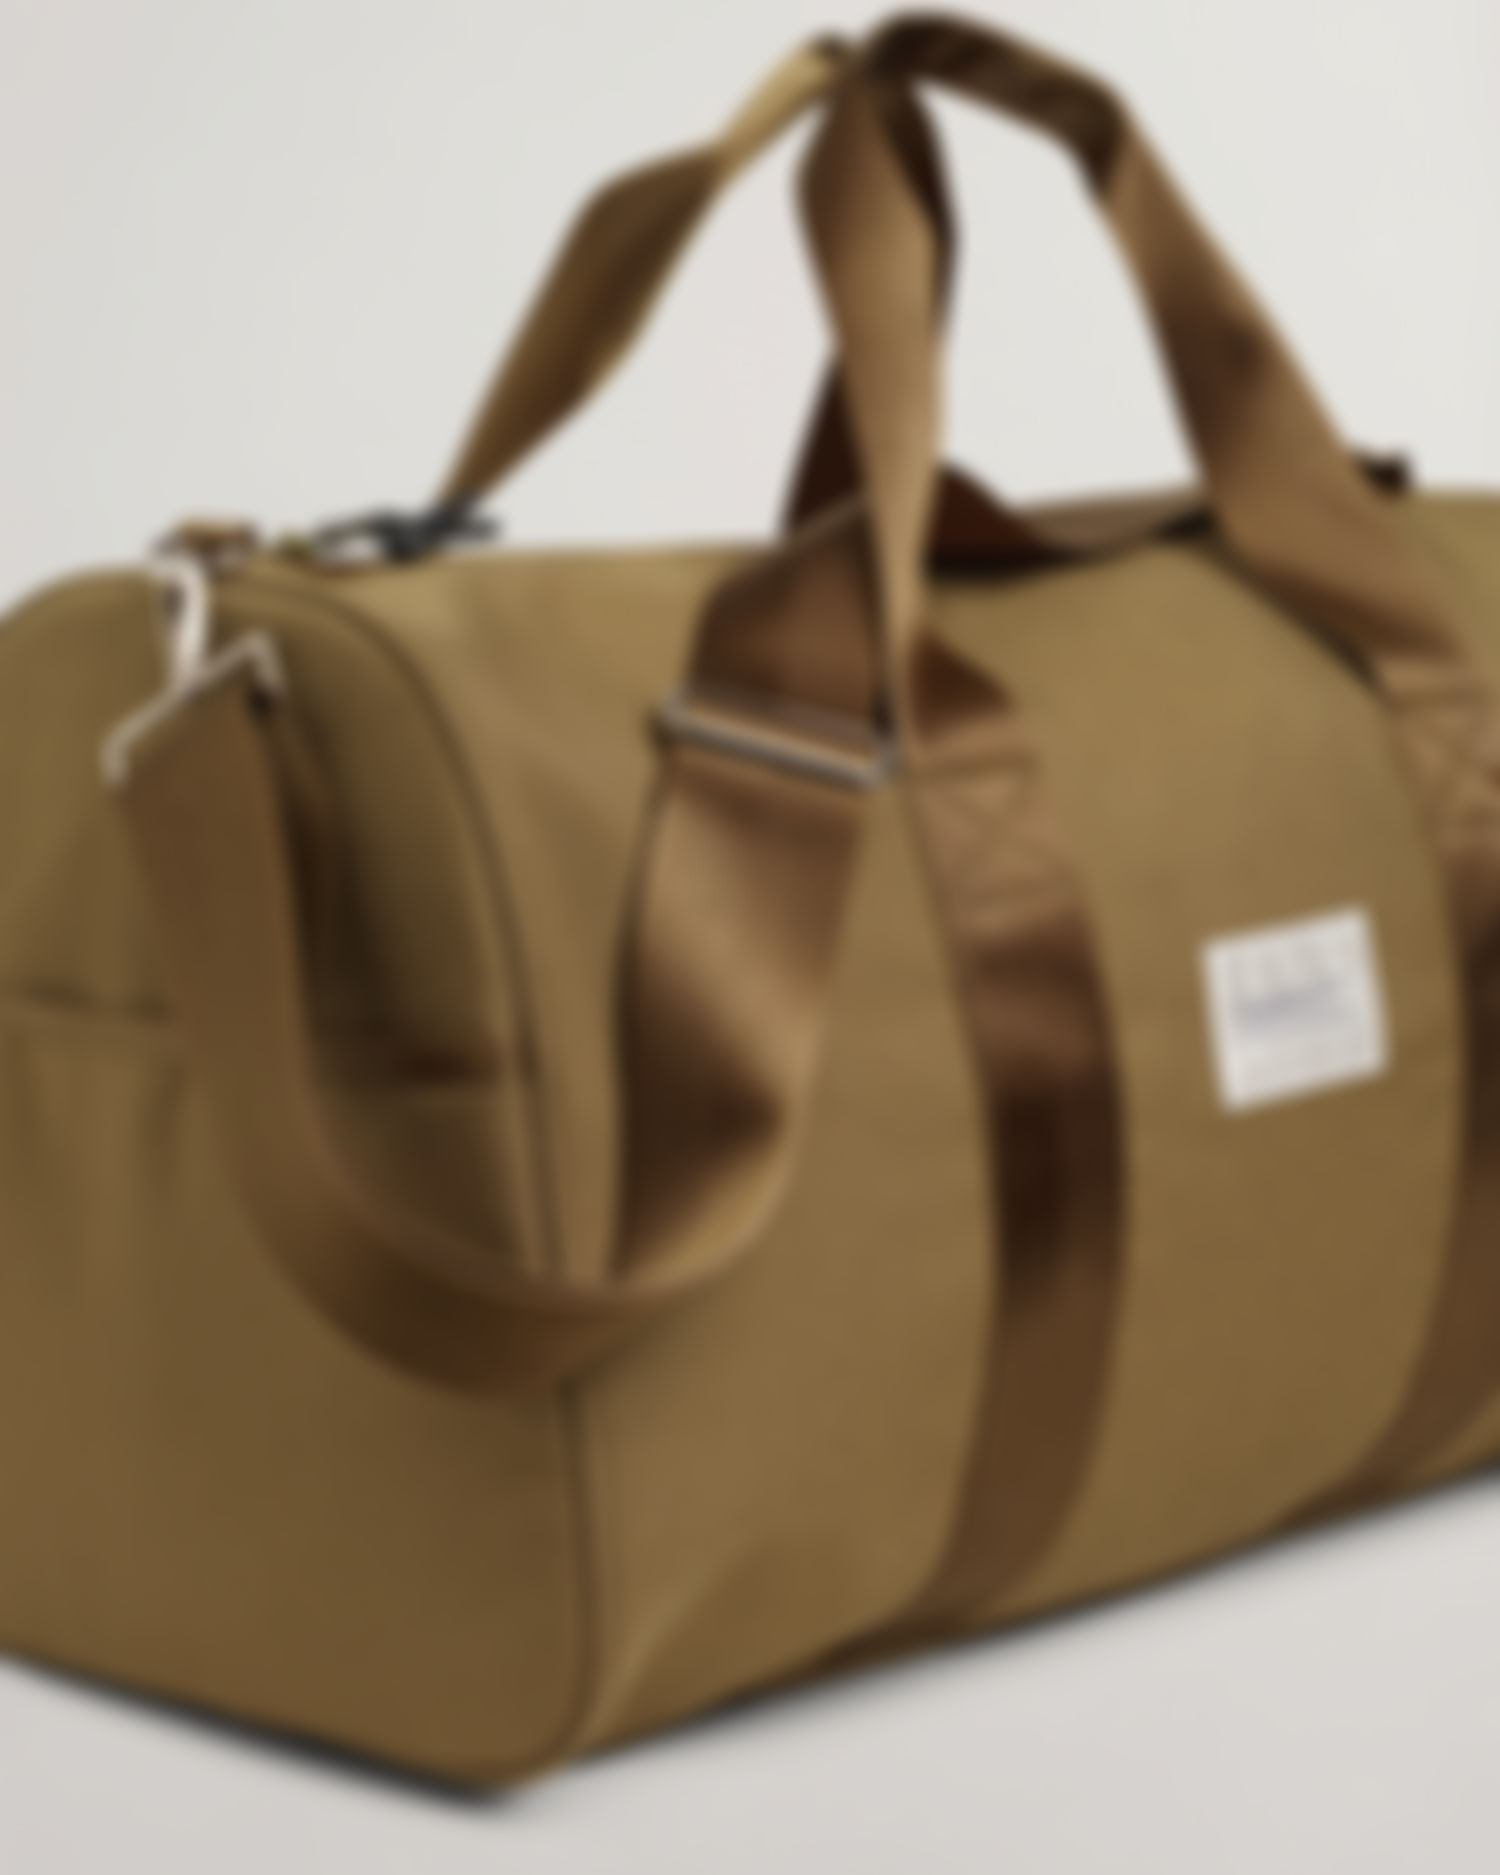 Essential Duffle Bag